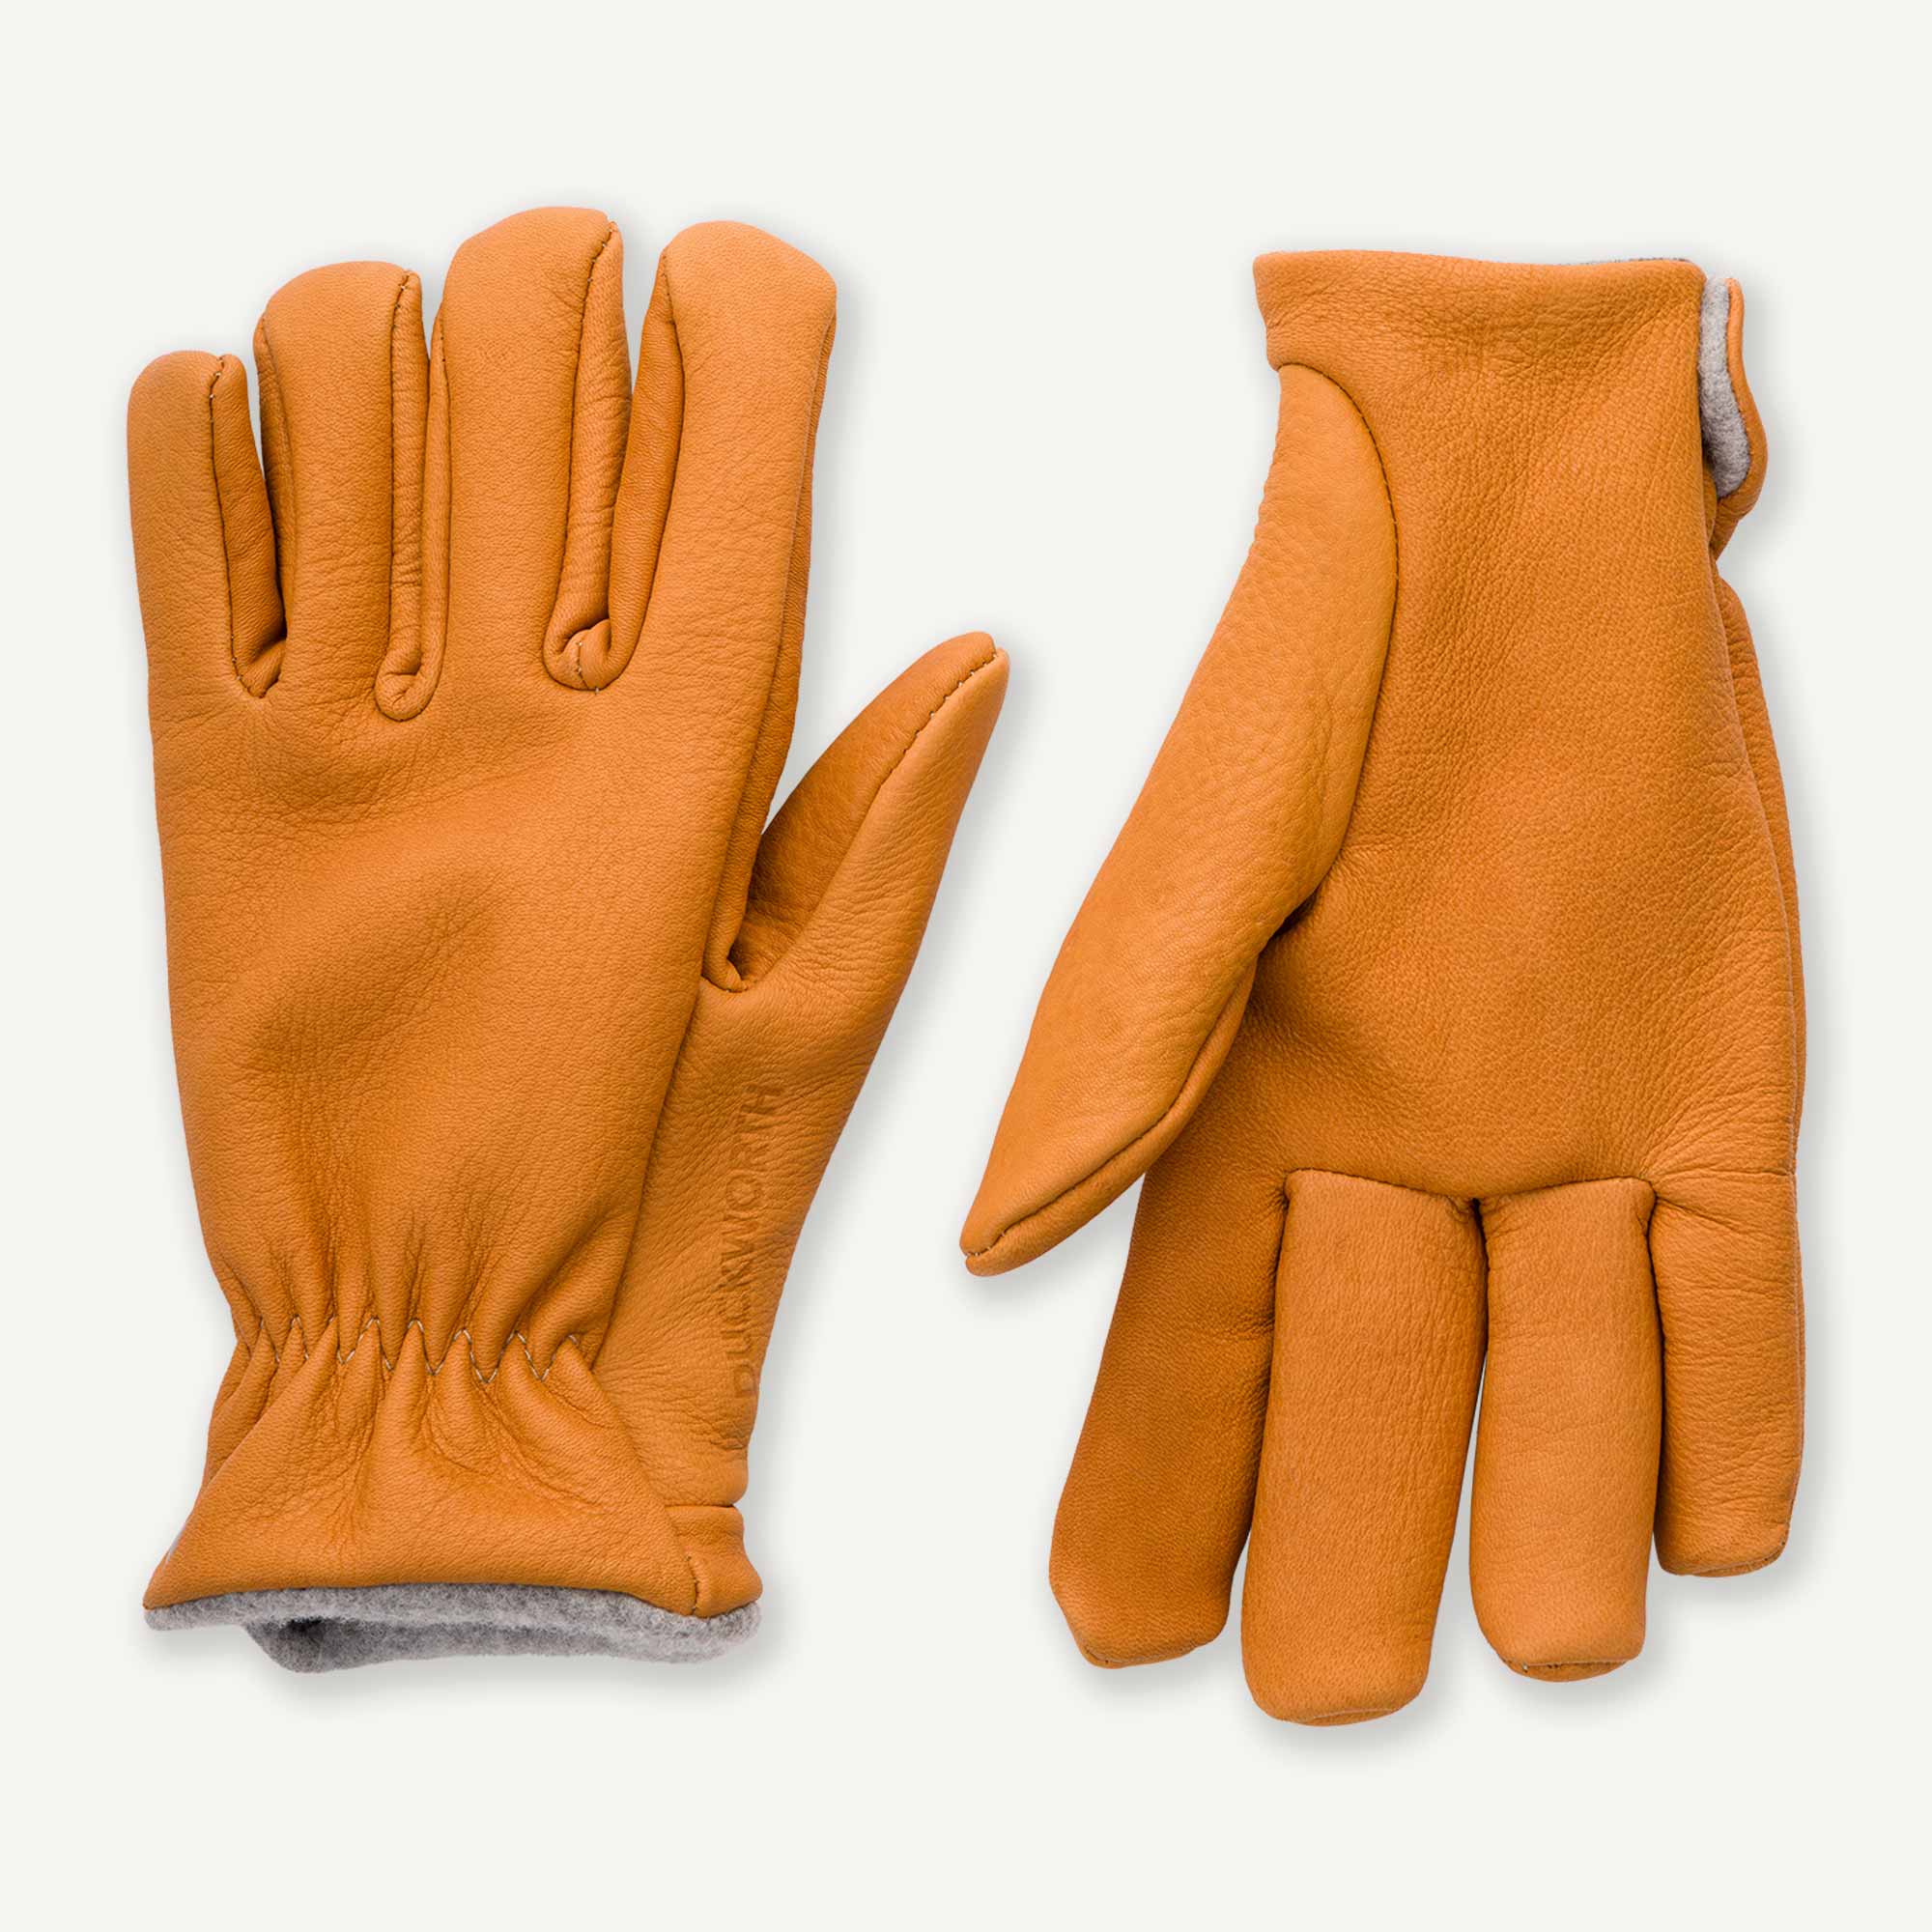 Deerskin Roper Glove - Lined